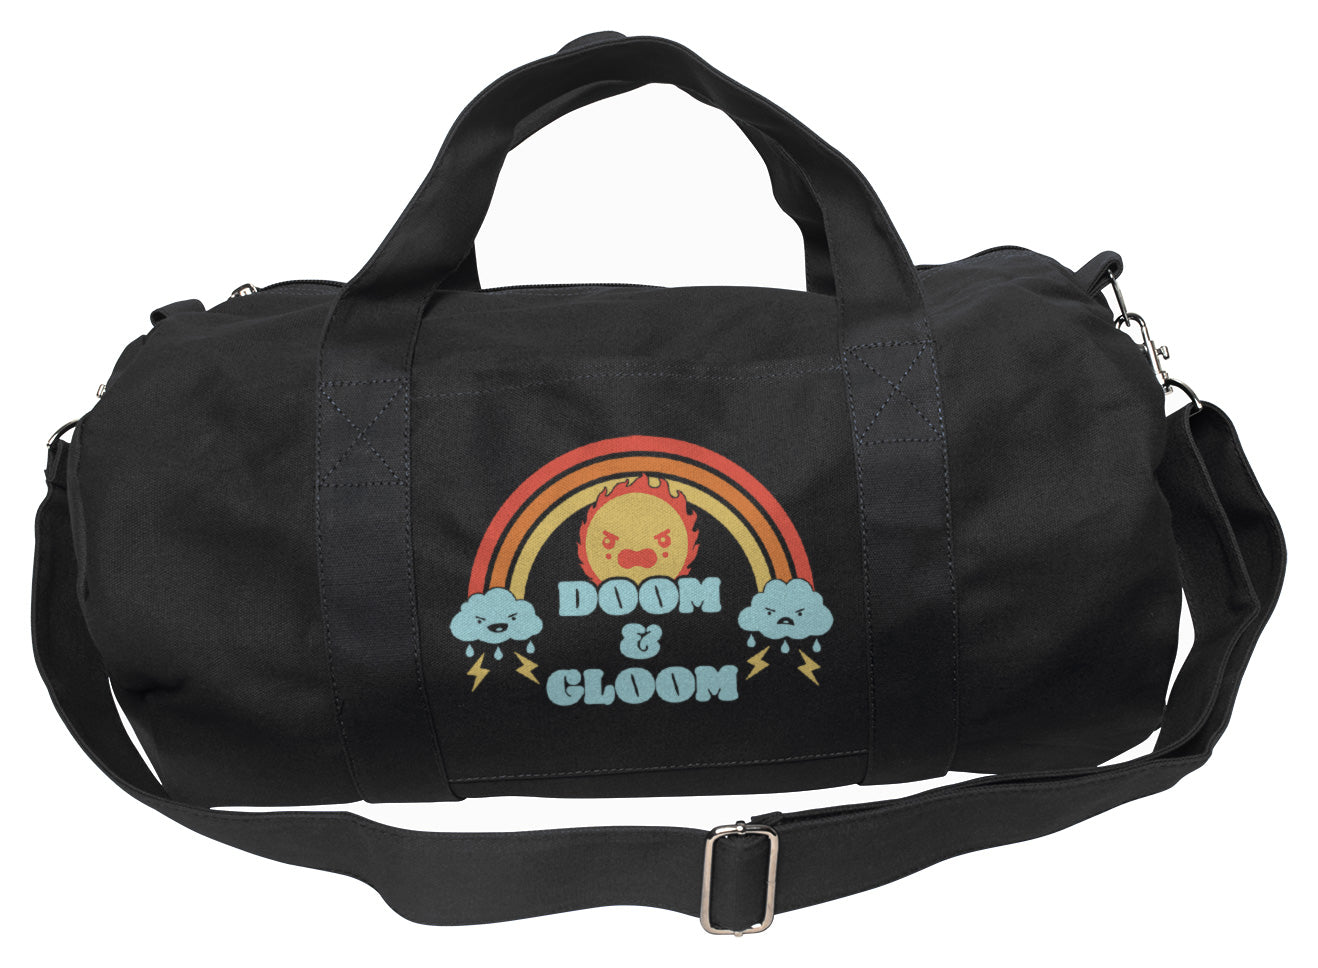 Doom and Gloom Duffel Bag